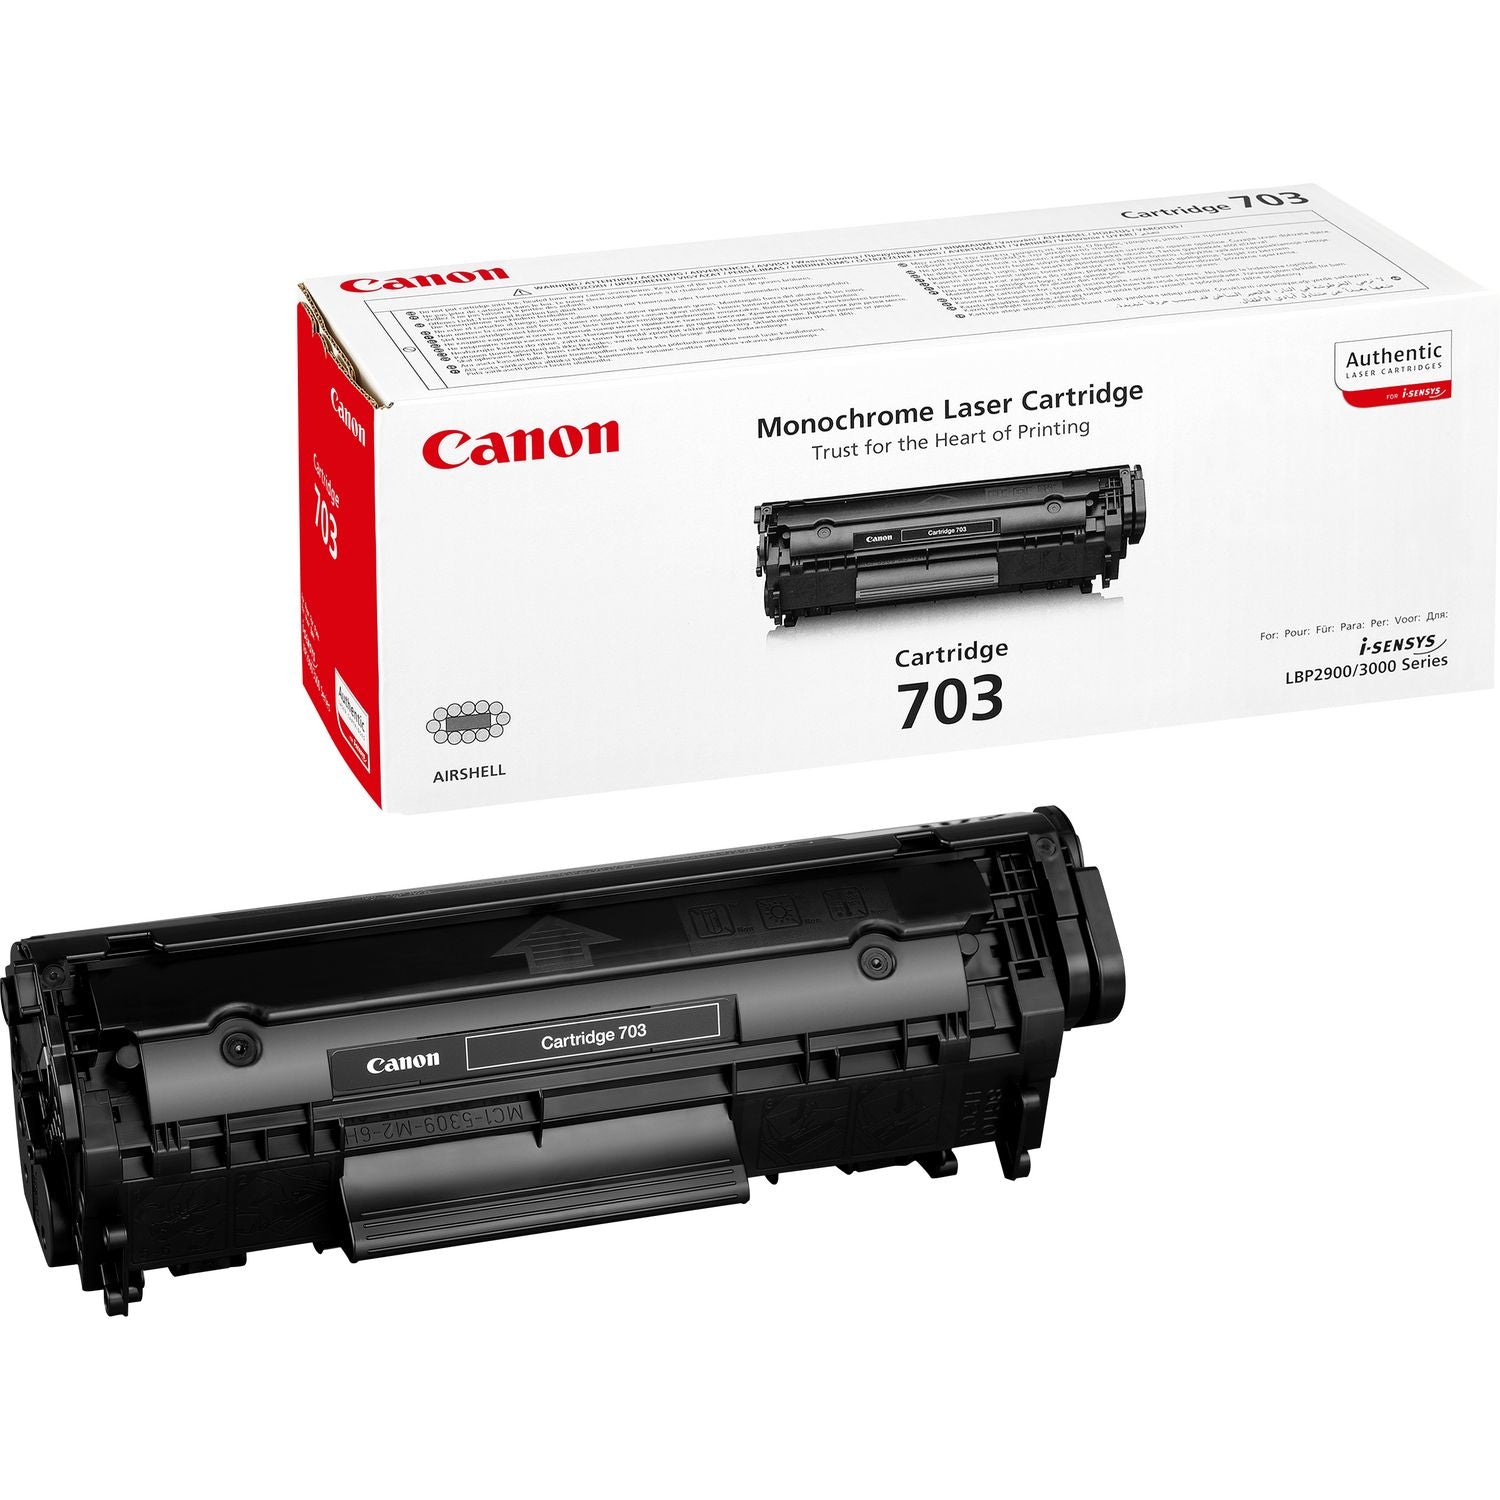 Canon 7616A005/703 Toner cartridge black, 2K pages/5% for Canon LBP-3000